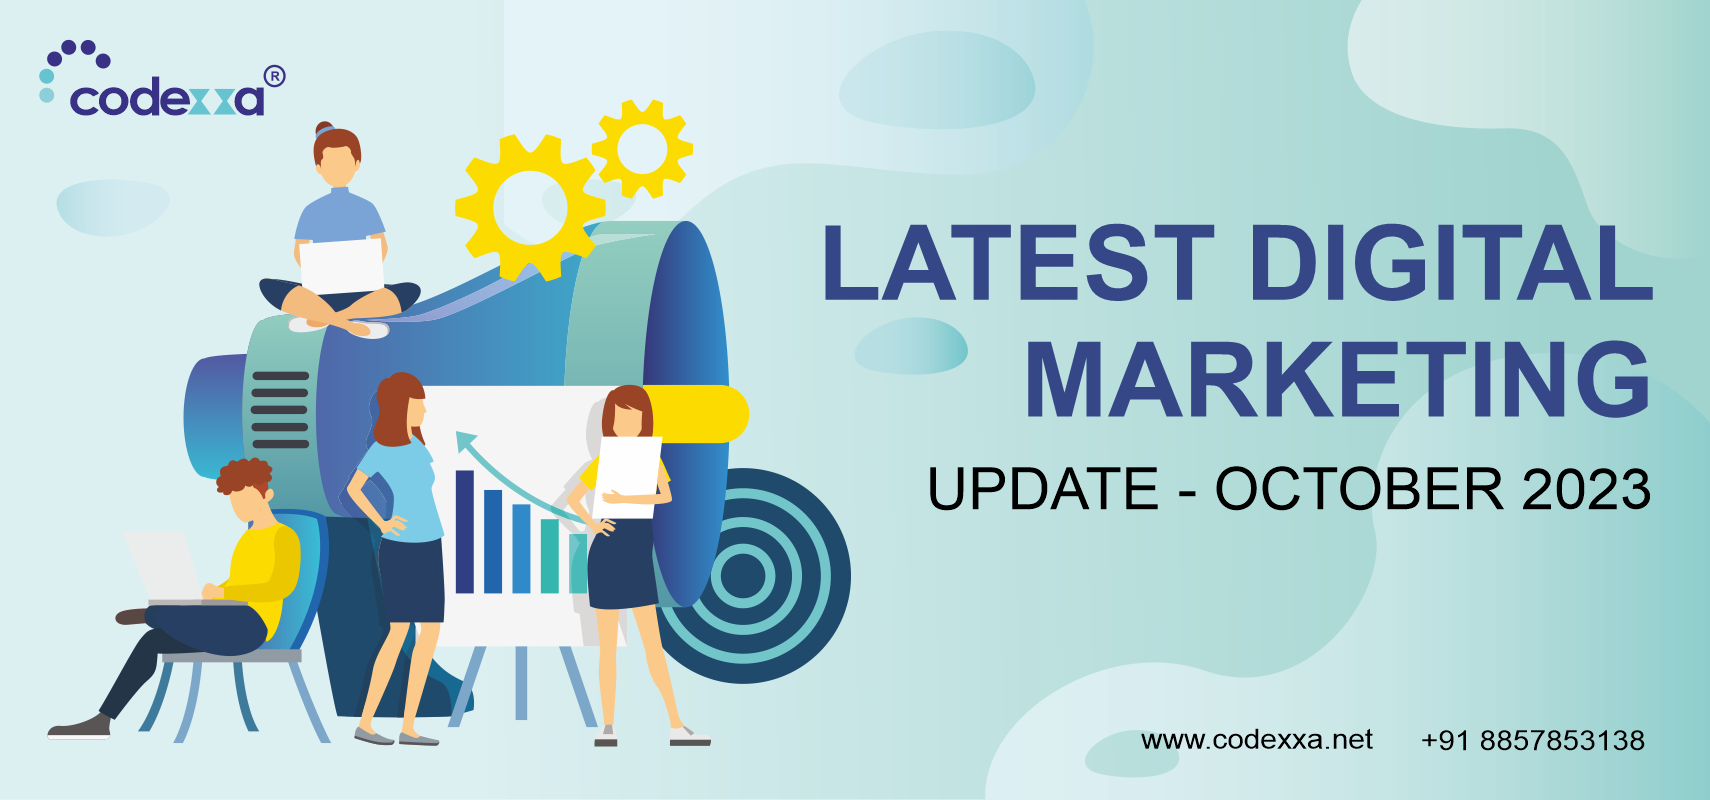 Latest-Digital-Marketing-Update-October-2023